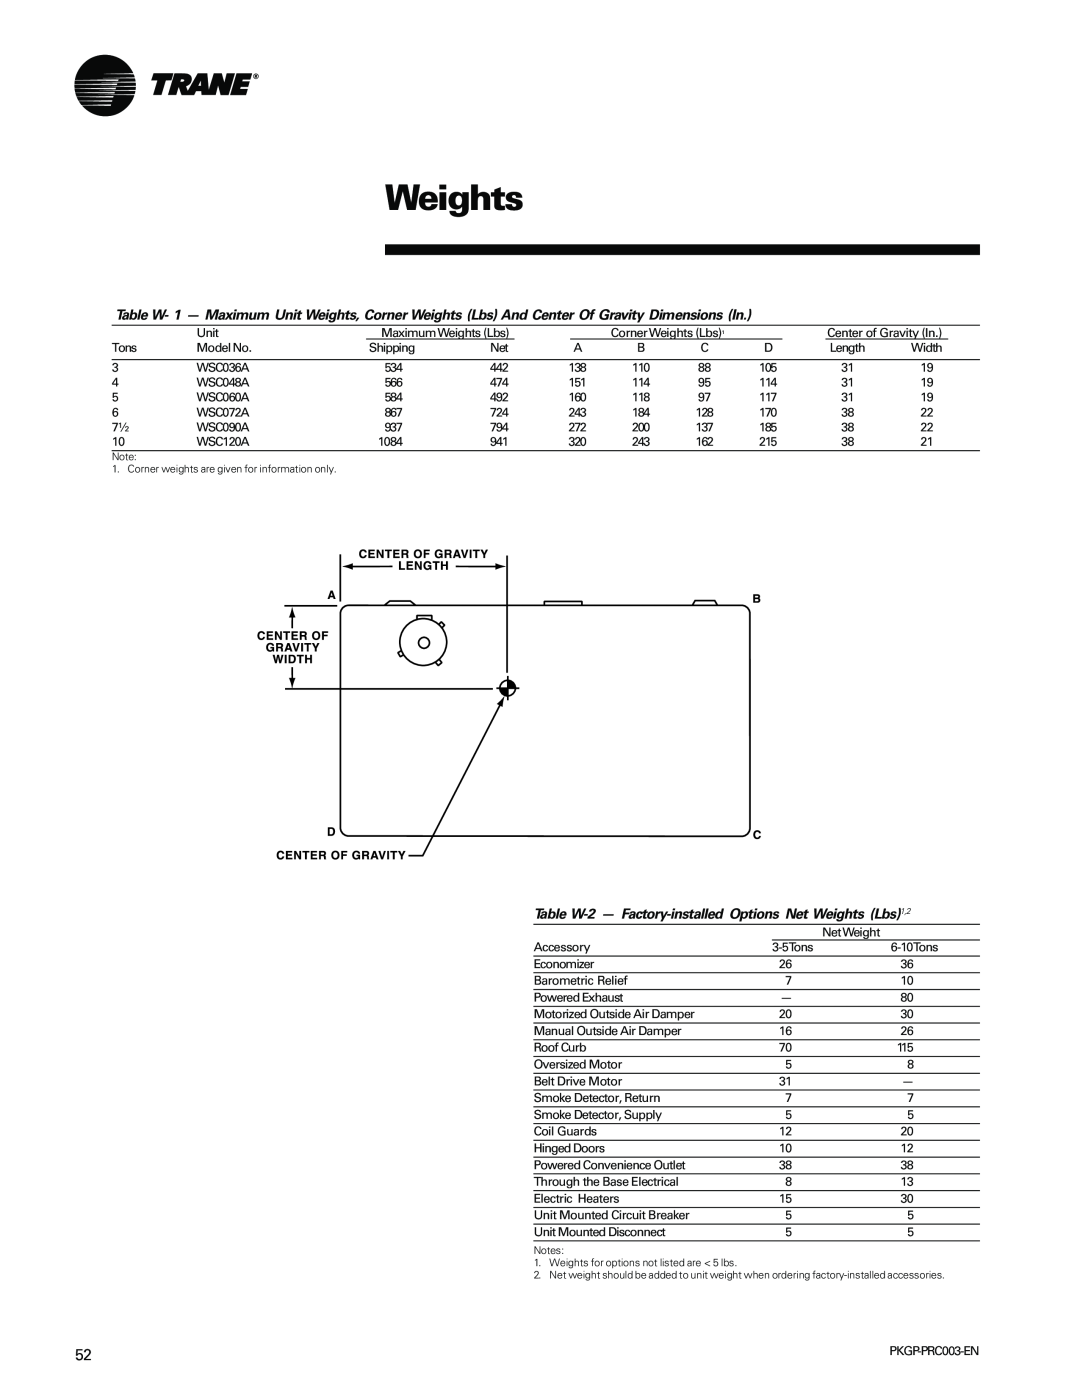 Trane PKGP-PRC003-EN manual Weights 